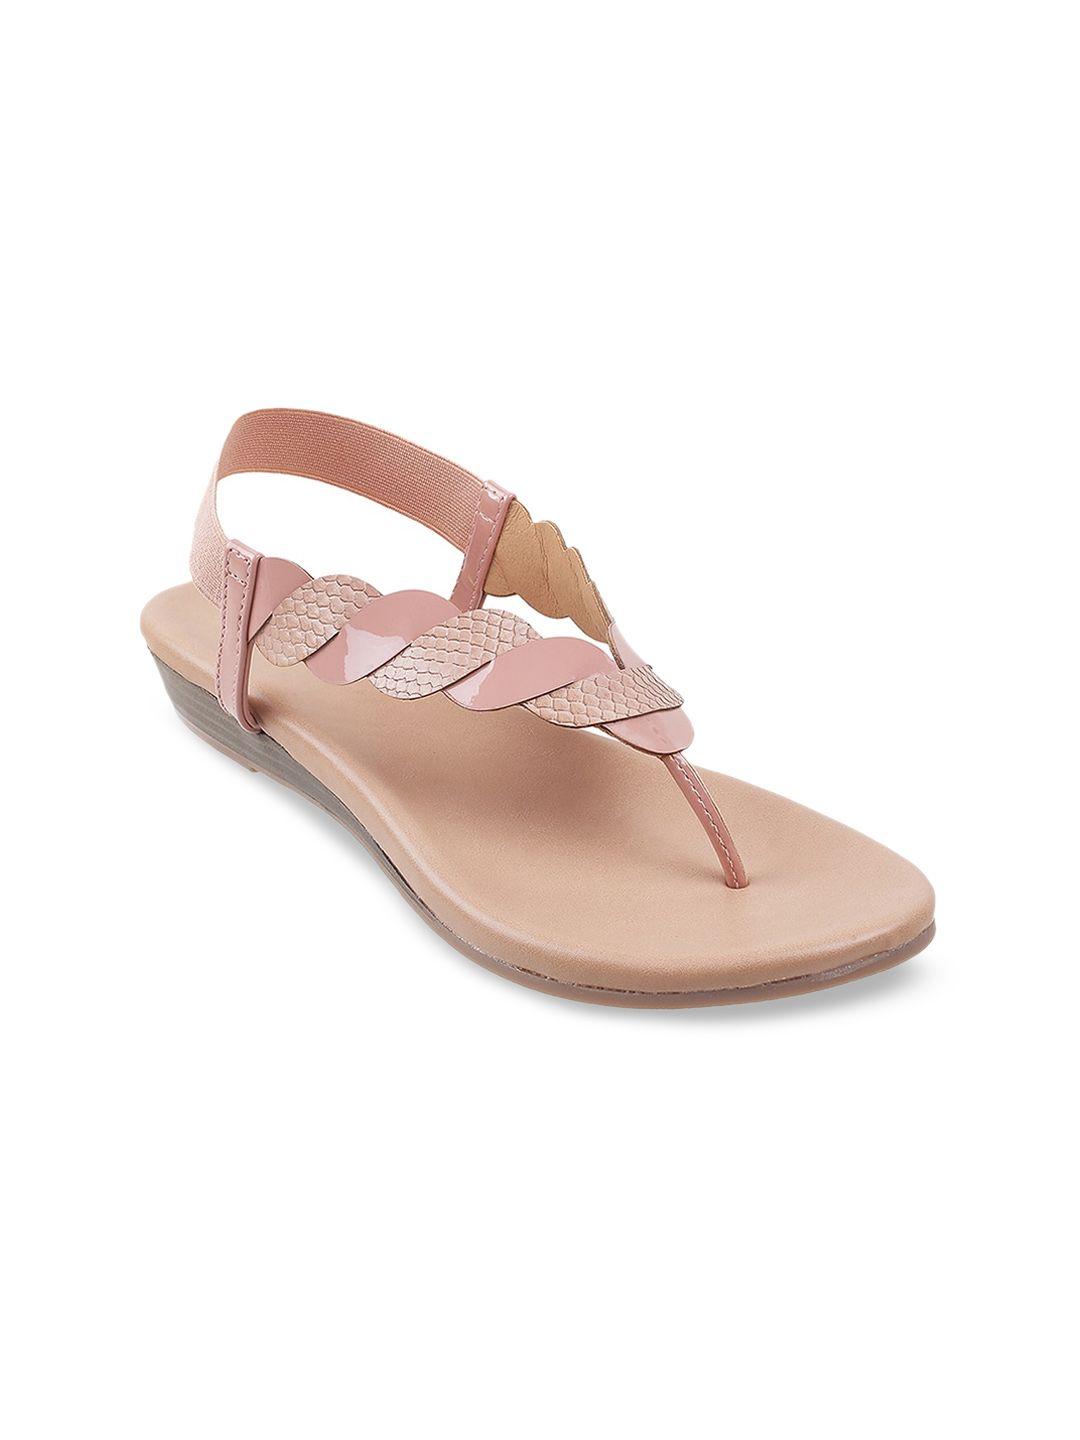 mochi-women-peach-coloured-textured-open-toe-flats